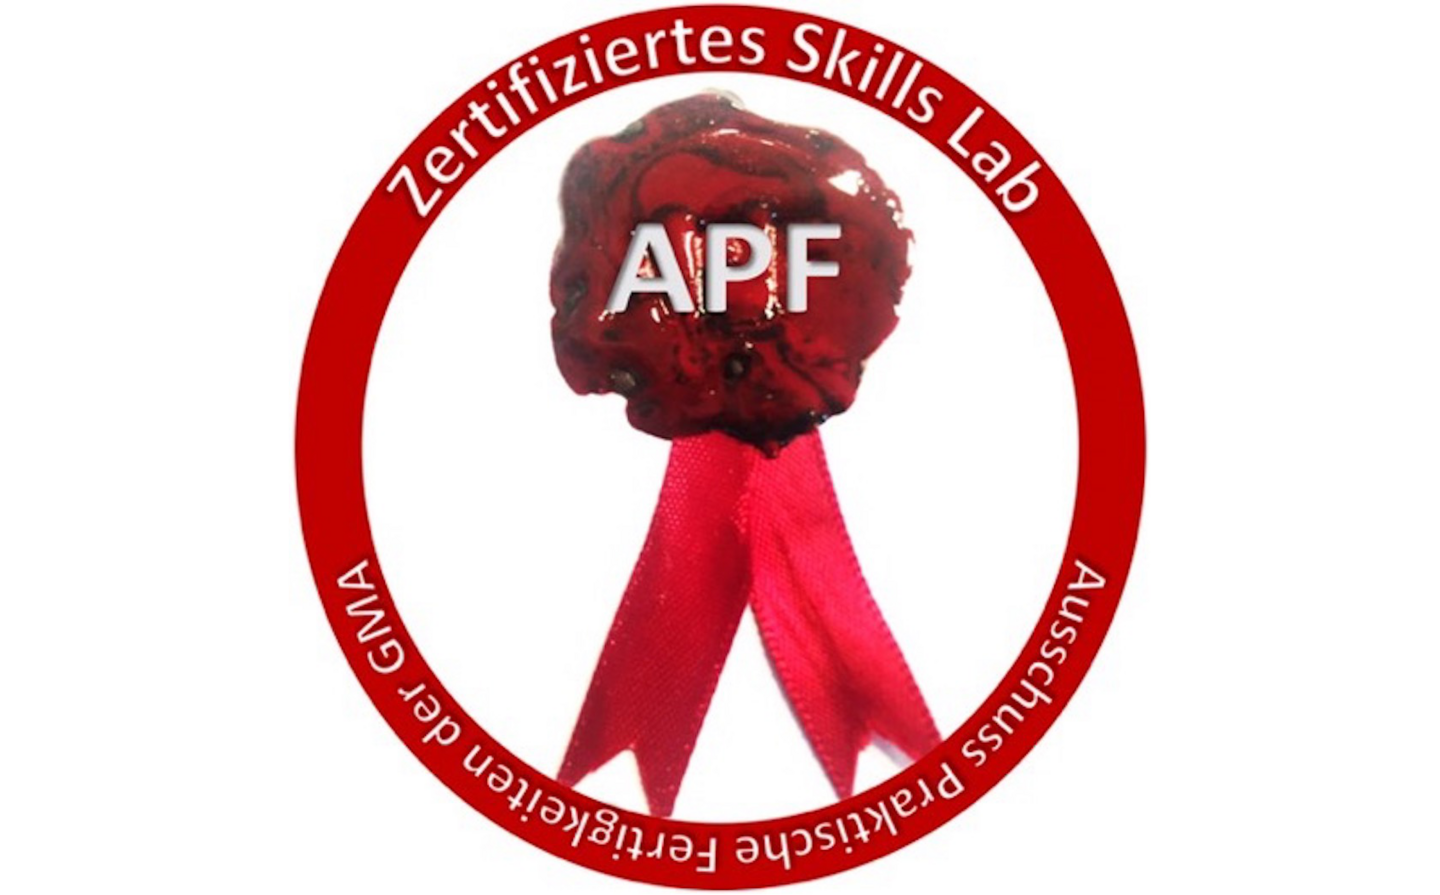 Zertifiziertes Skills Lab (APF)